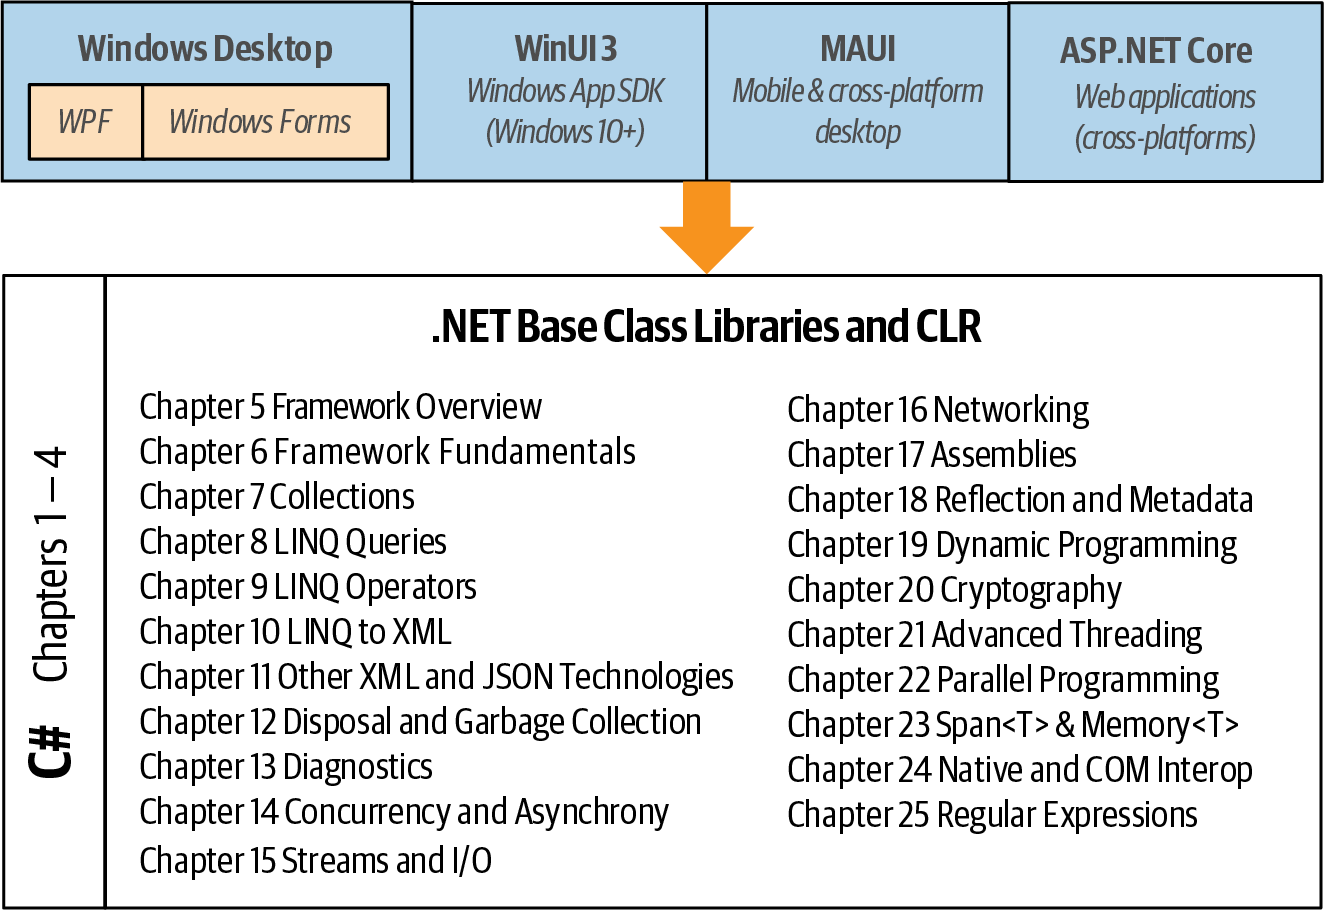 10. Exception Handling - Essential C# 3.0: For .NET Framework 3.5 [Book]